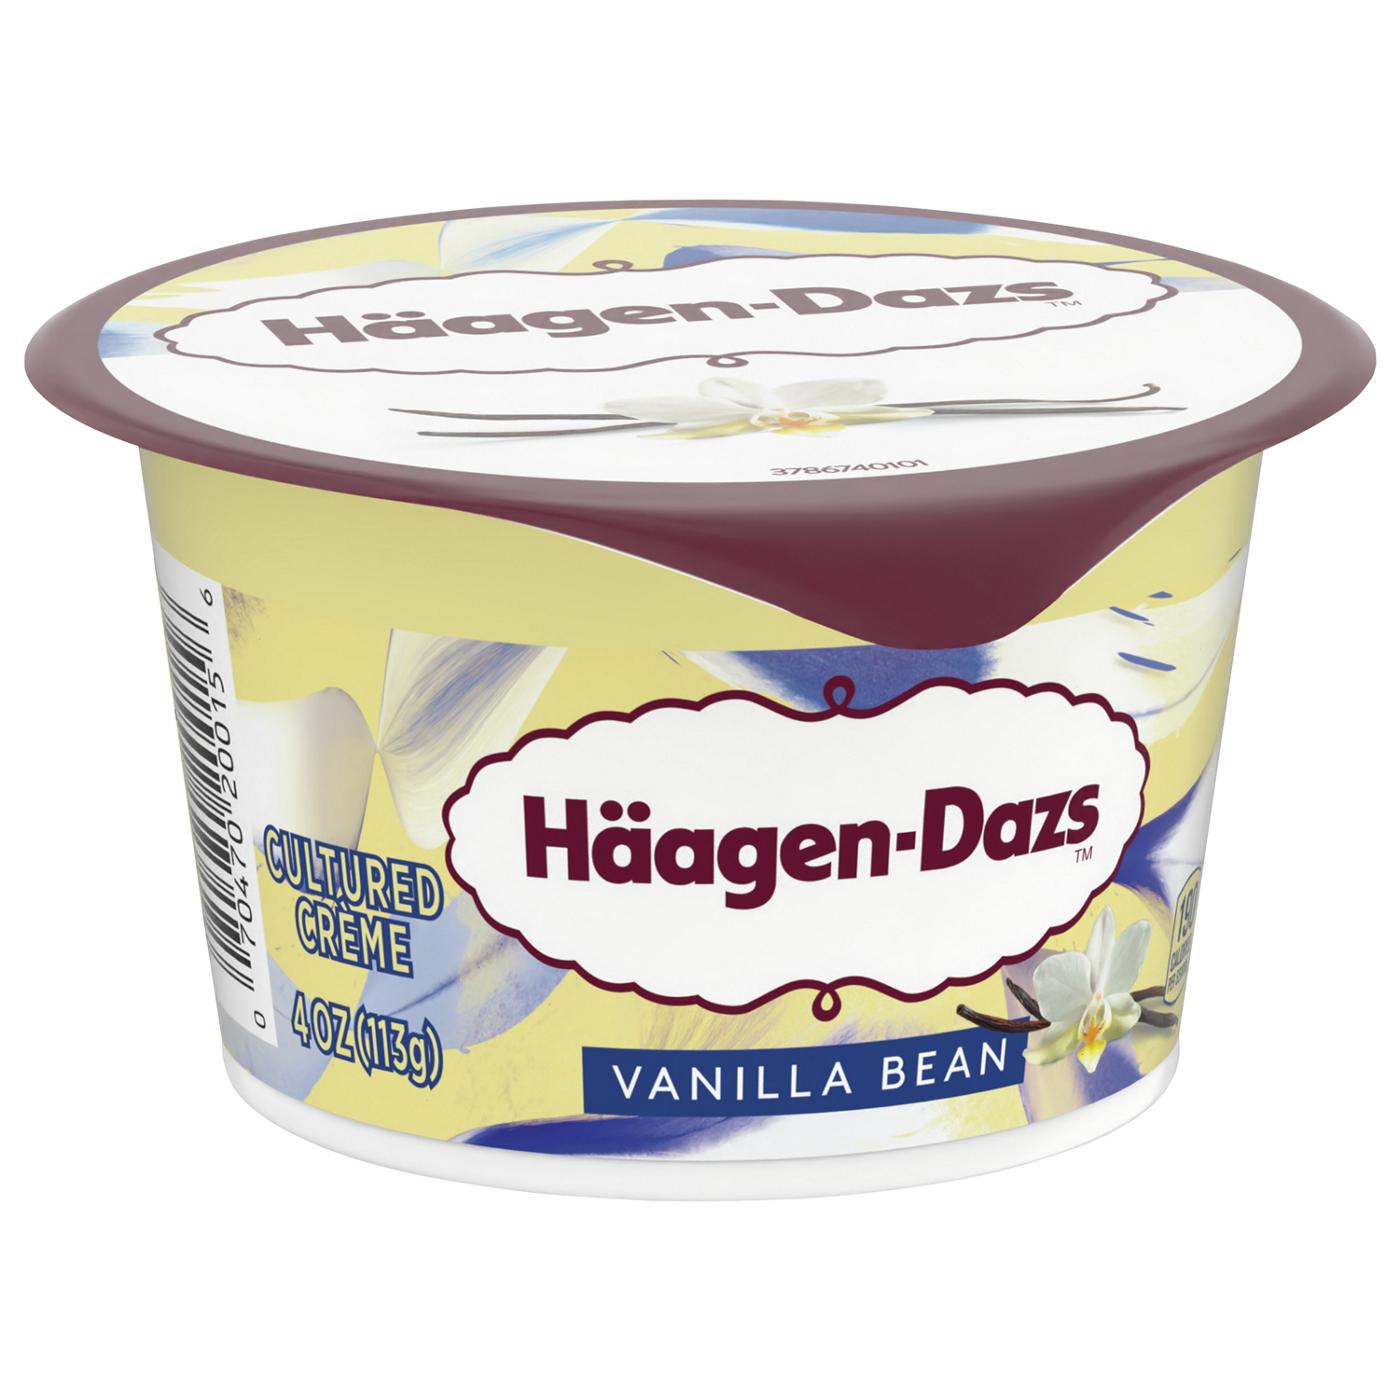 Haagen-Dazs Cultured Crème Yogurt Style Snack – Vanilla Bean; image 4 of 4